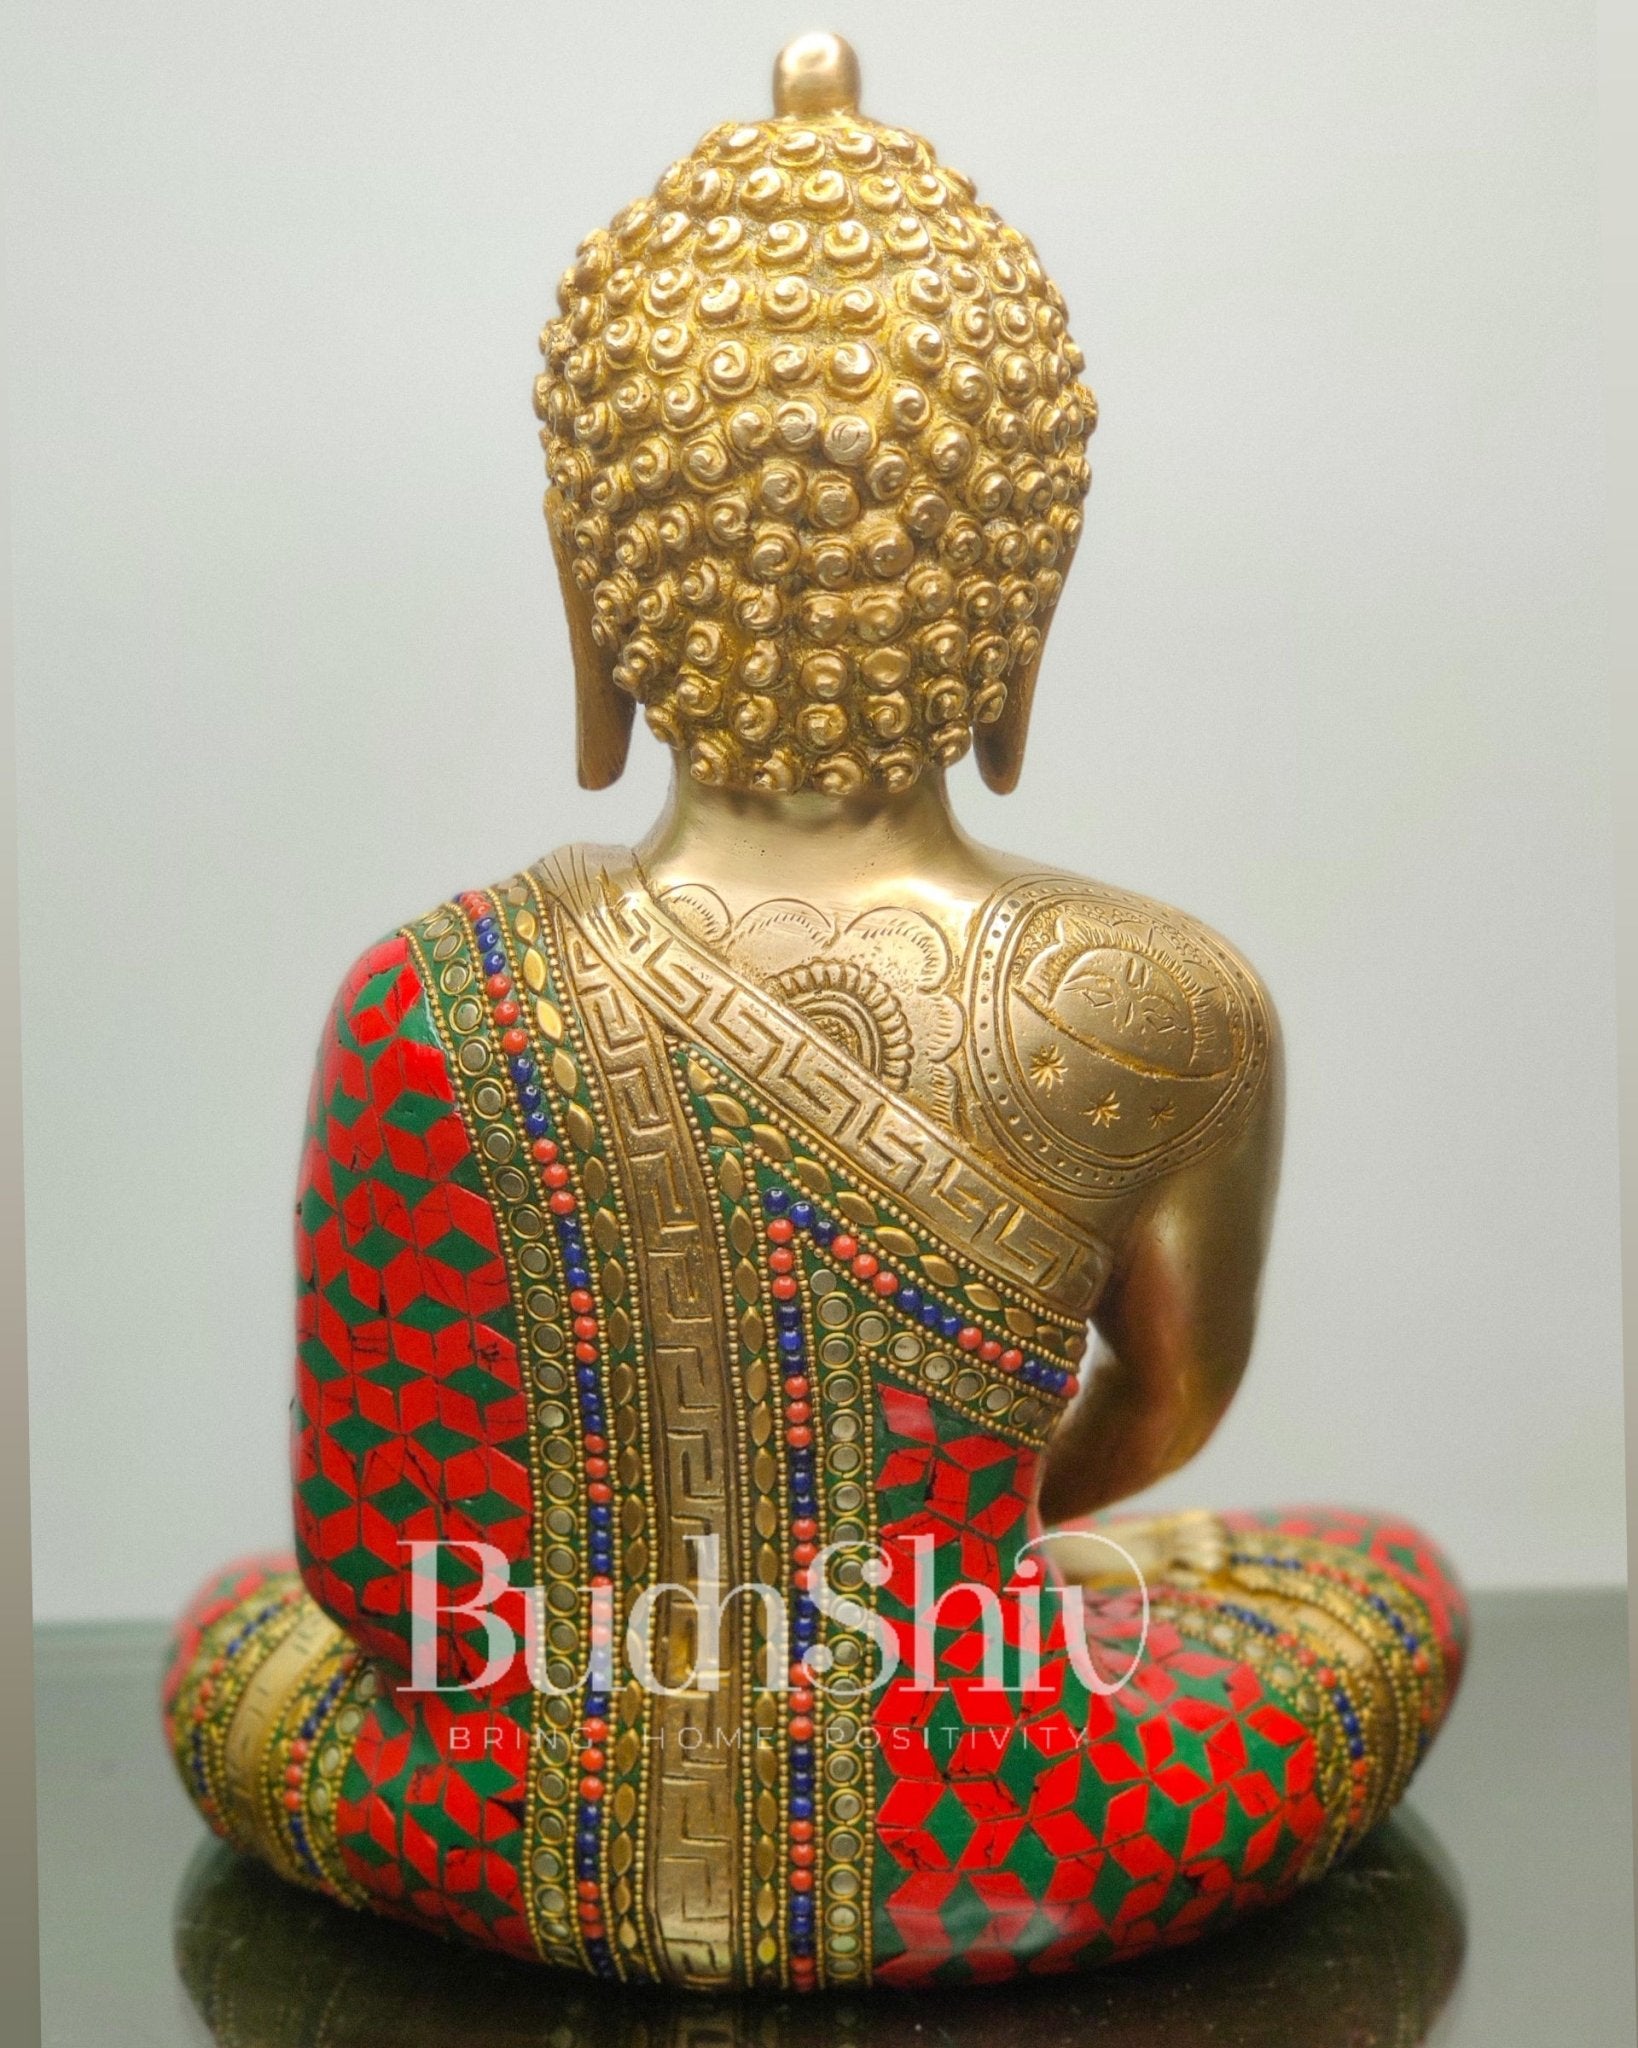 Buddha Brass Idol buddha meditation 12 inches - Budhshiv.com